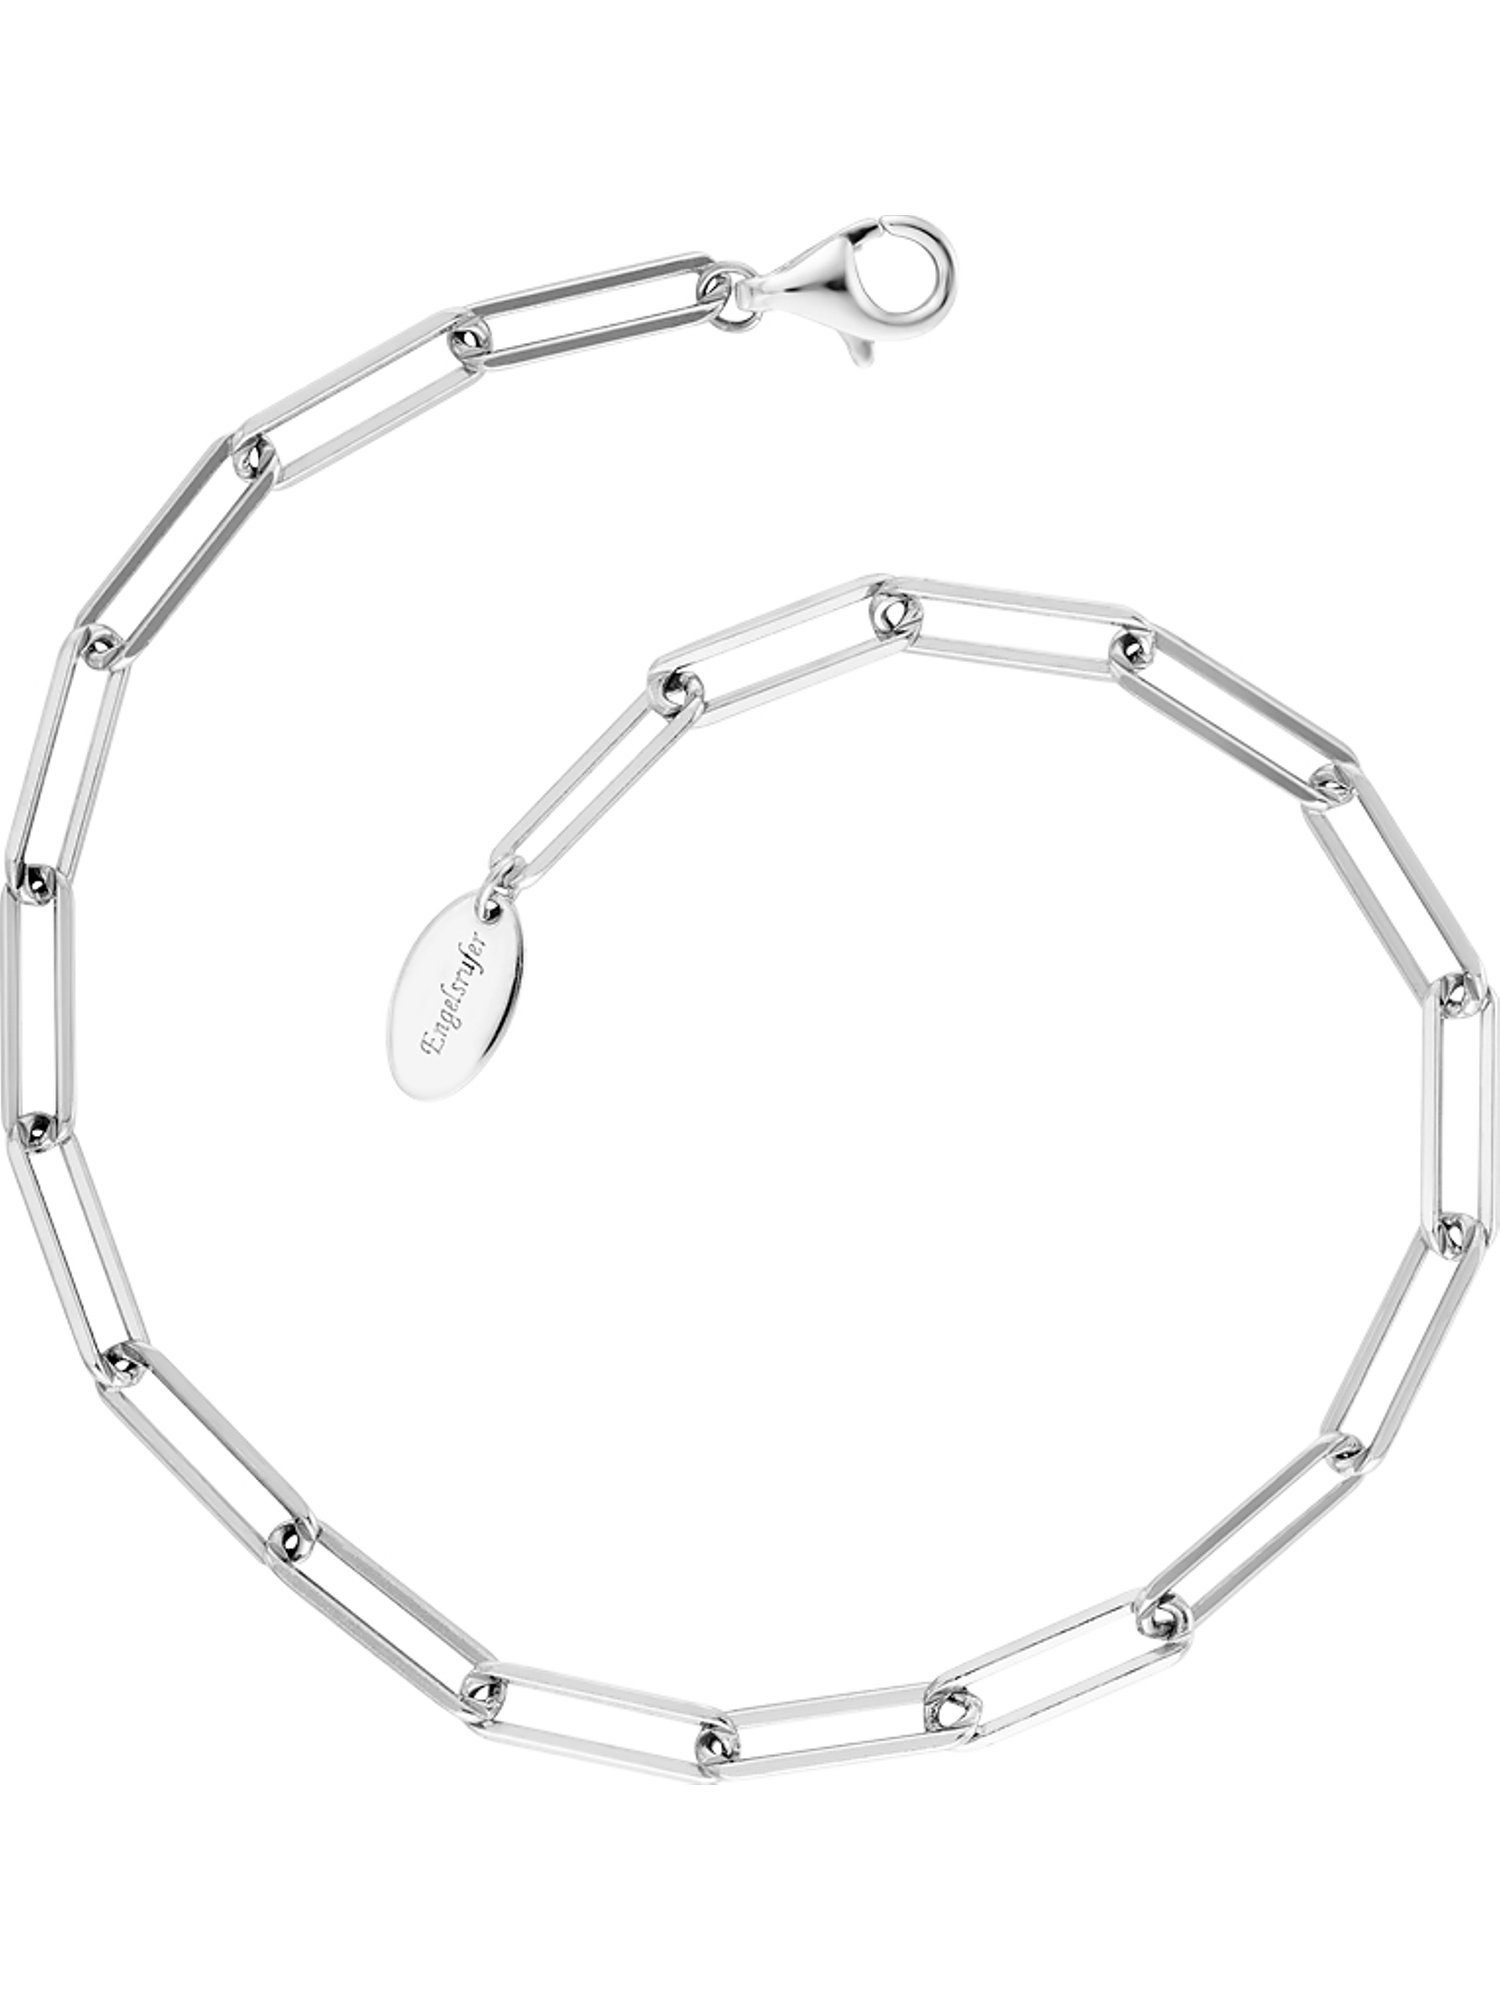 Silber für Engelsrufer Anker Charm-Armband Armband ERB-CHARM-ANKER-S, Charms, 925er Material: